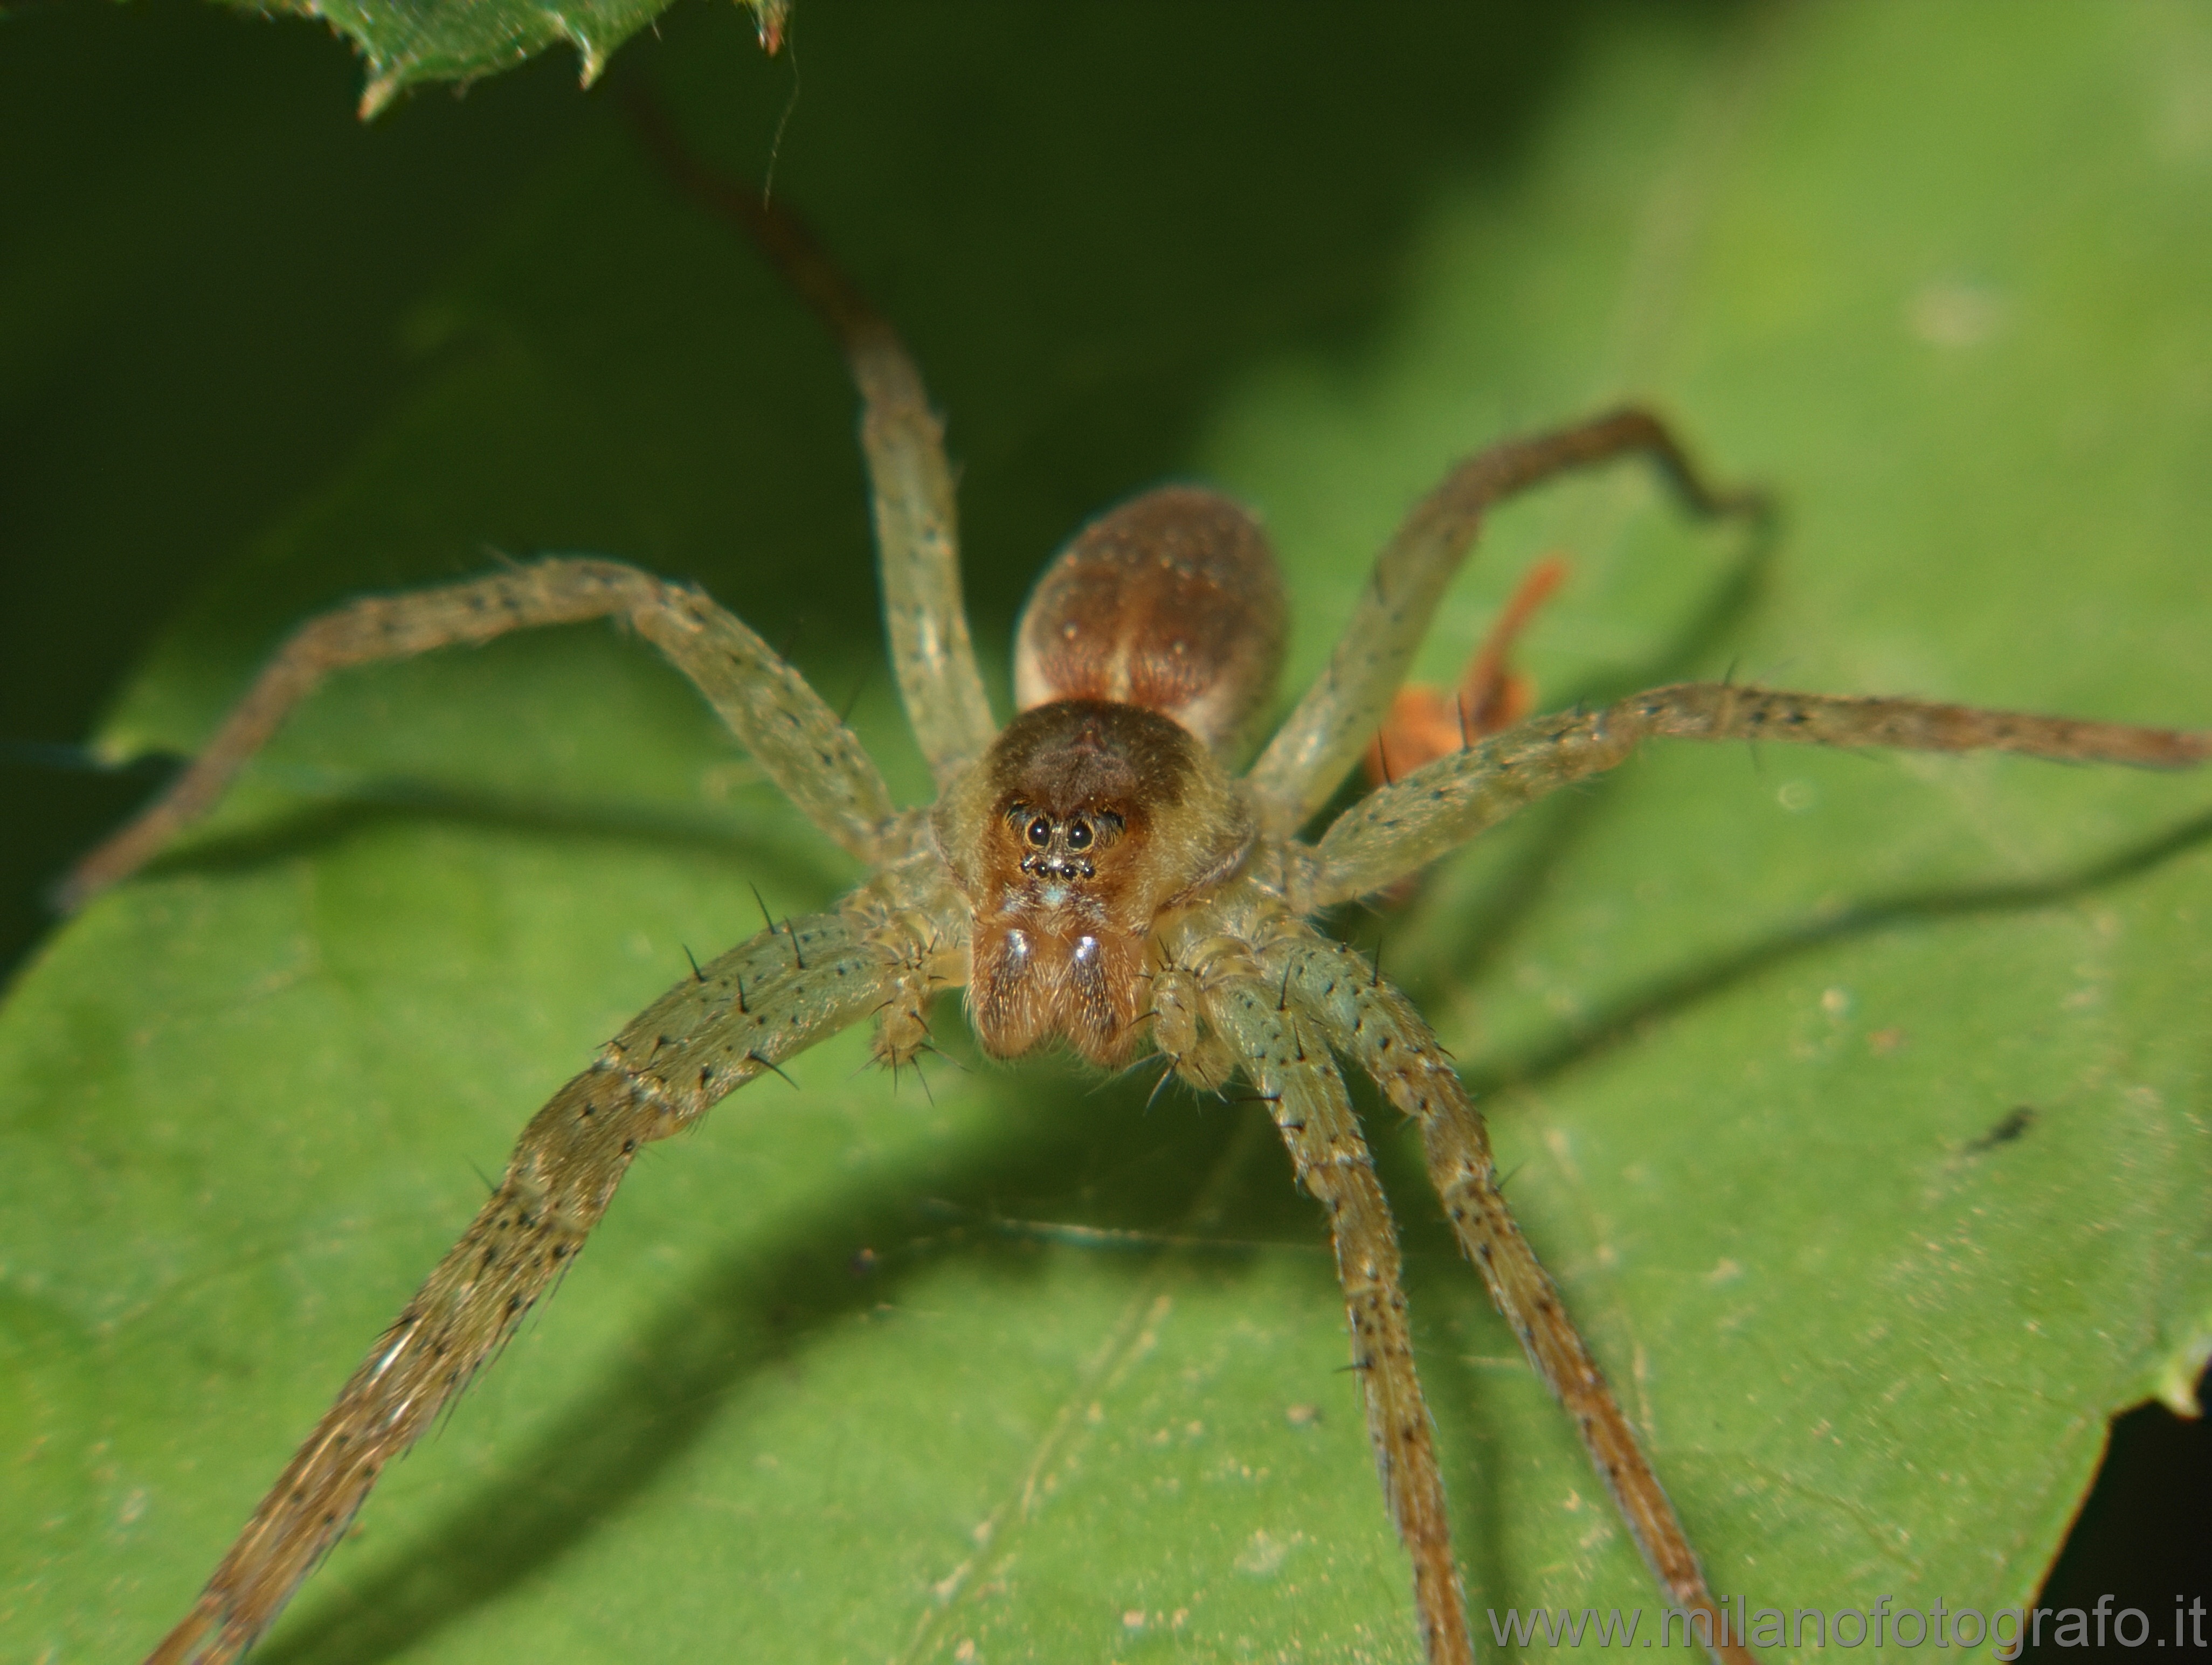 Cadrezzate (Varese, Italy): Spider of unidentified species - Cadrezzate (Varese, Italy)